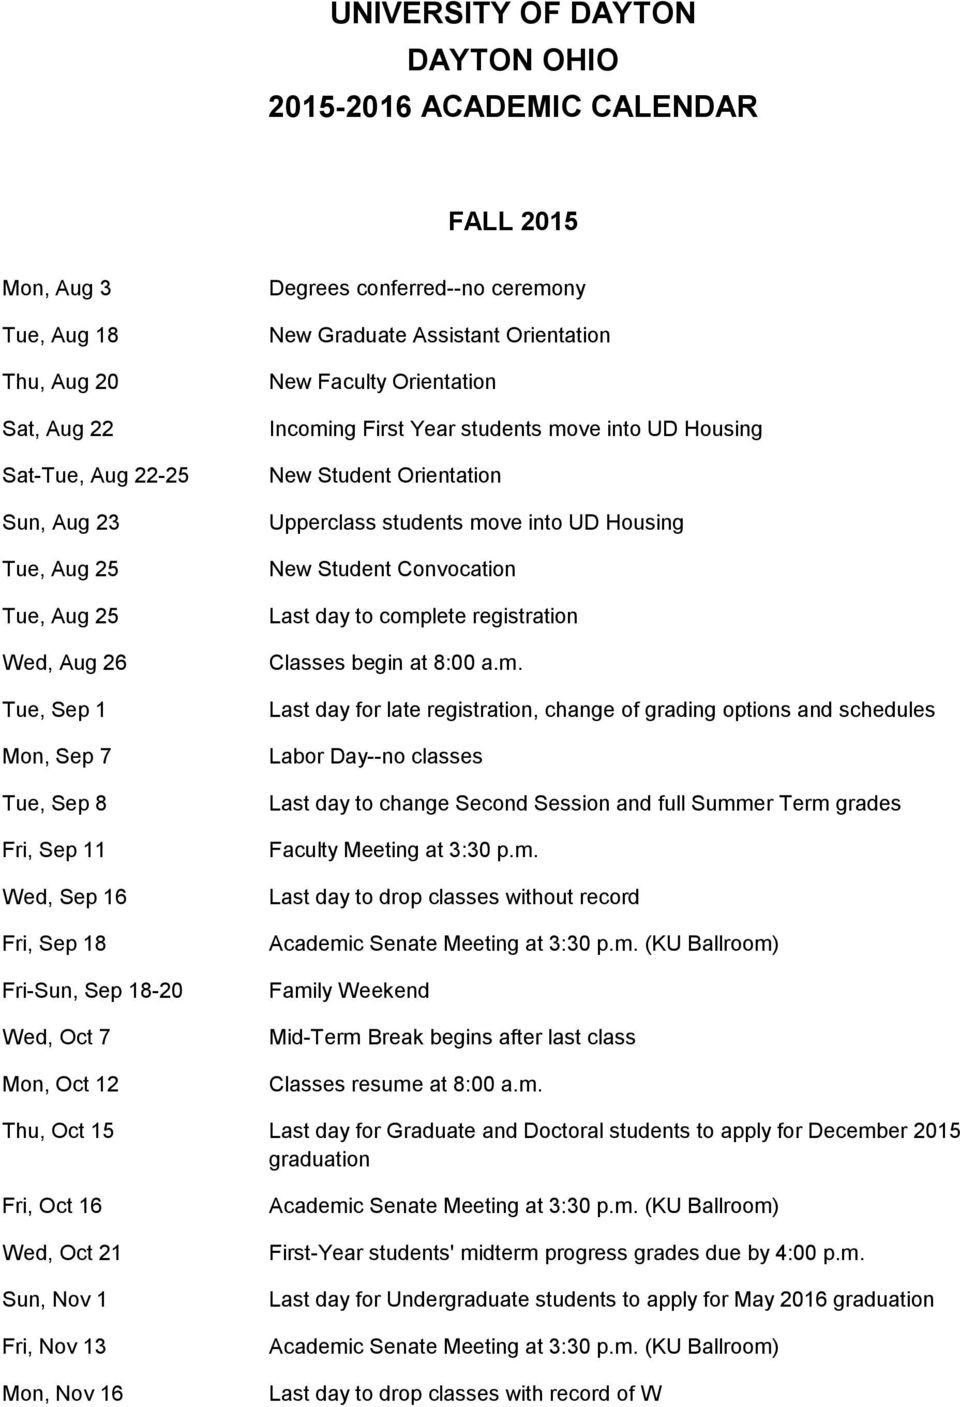 academic-calendar-unr